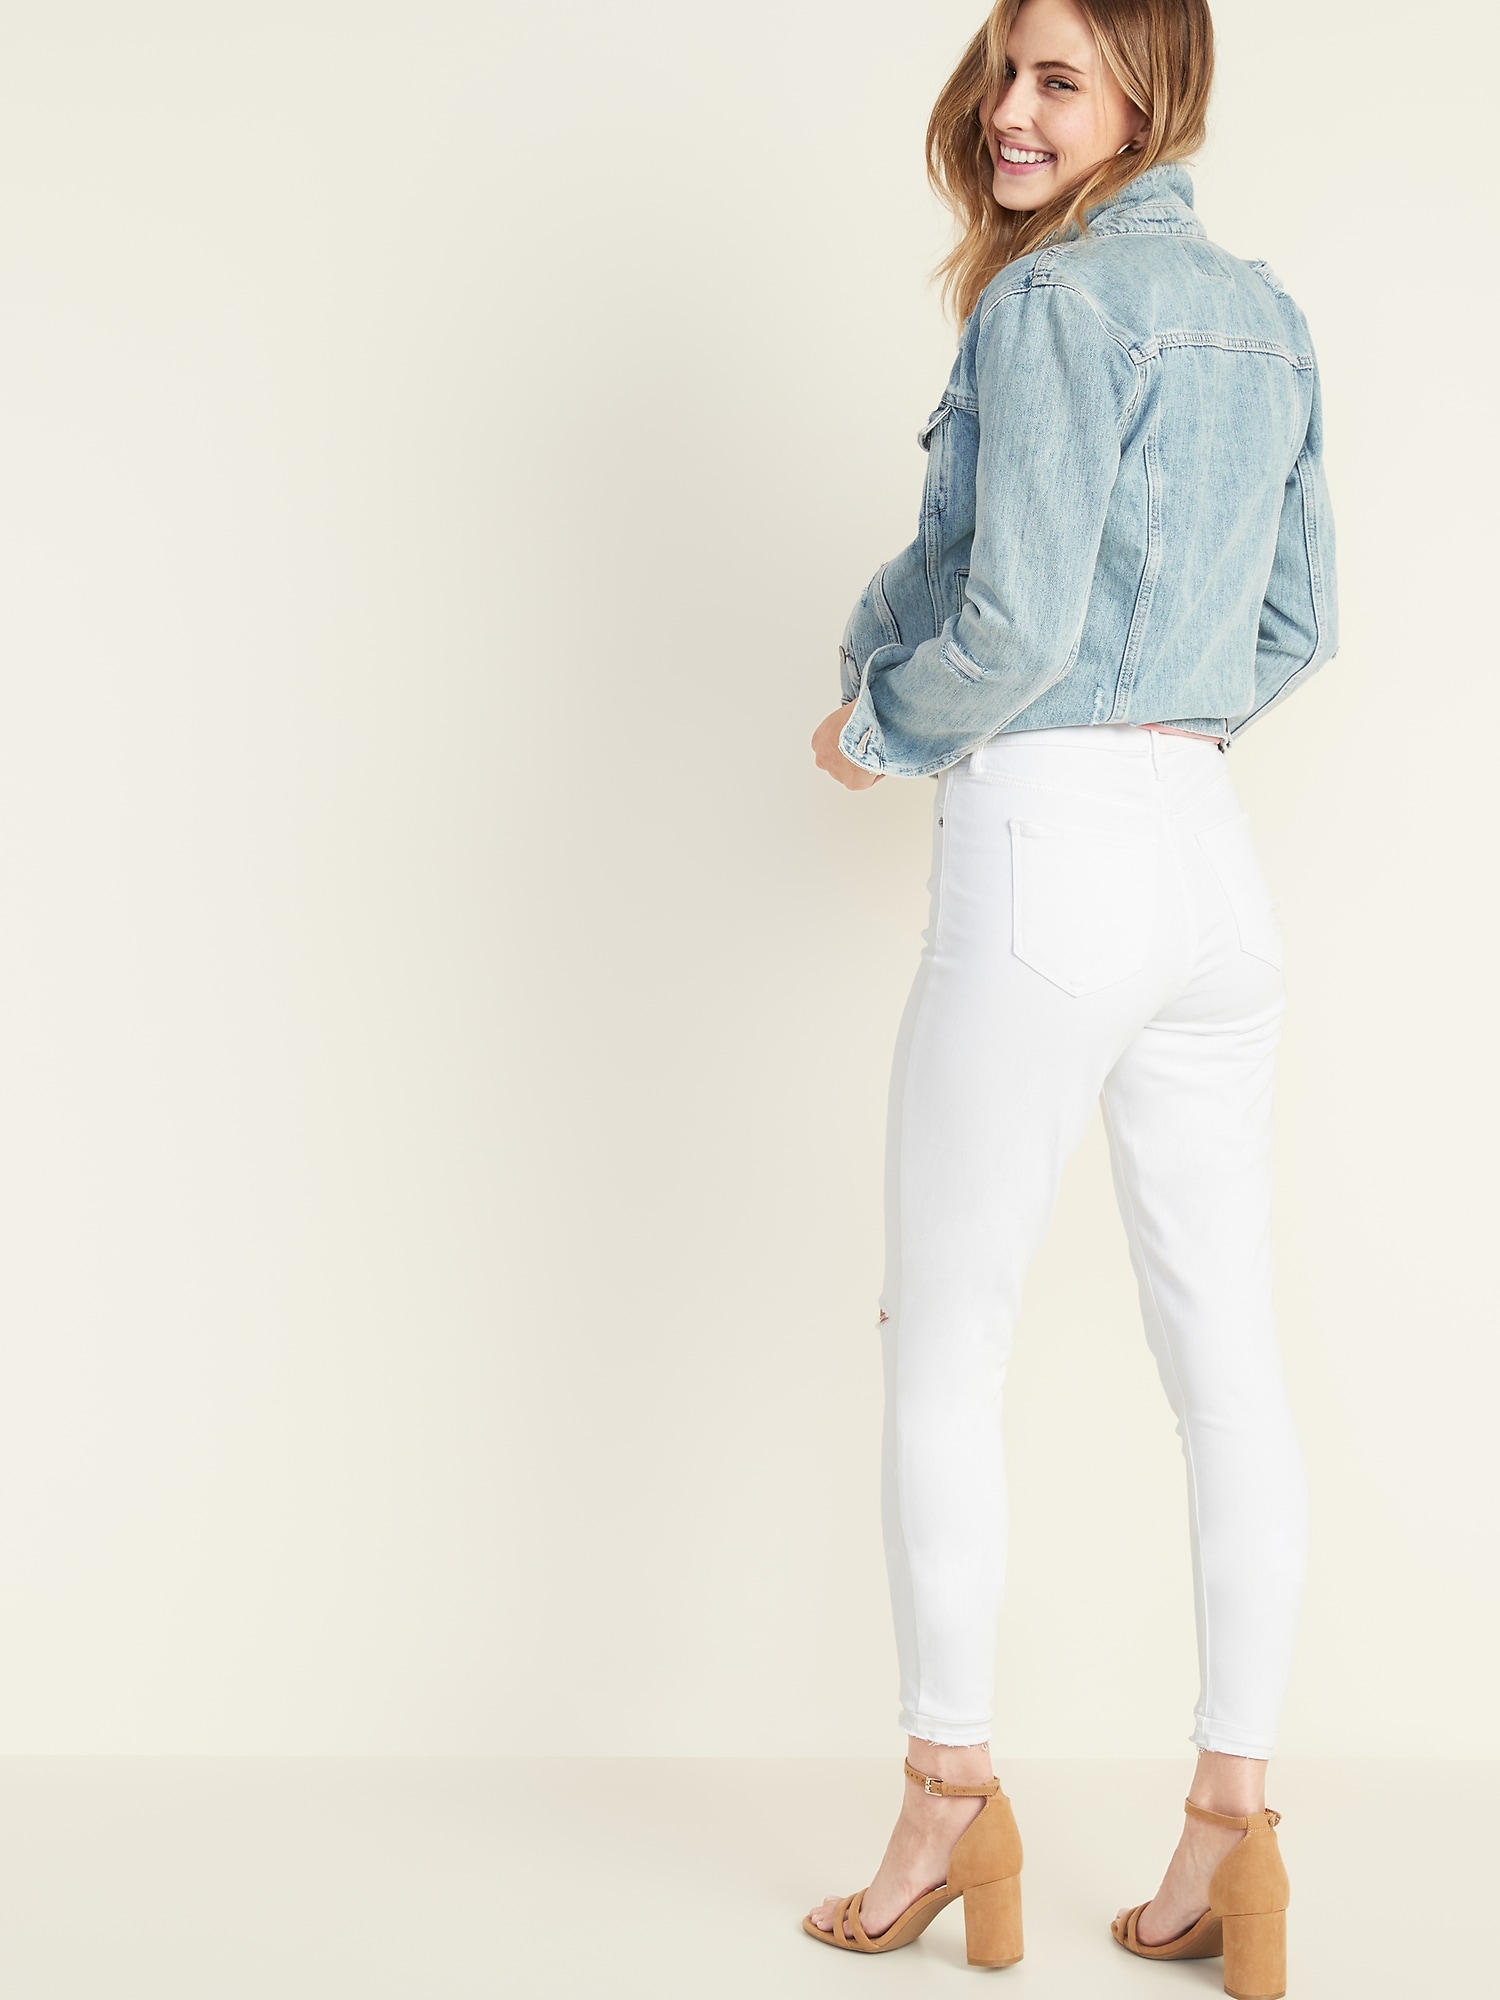 skinny girl white jeans